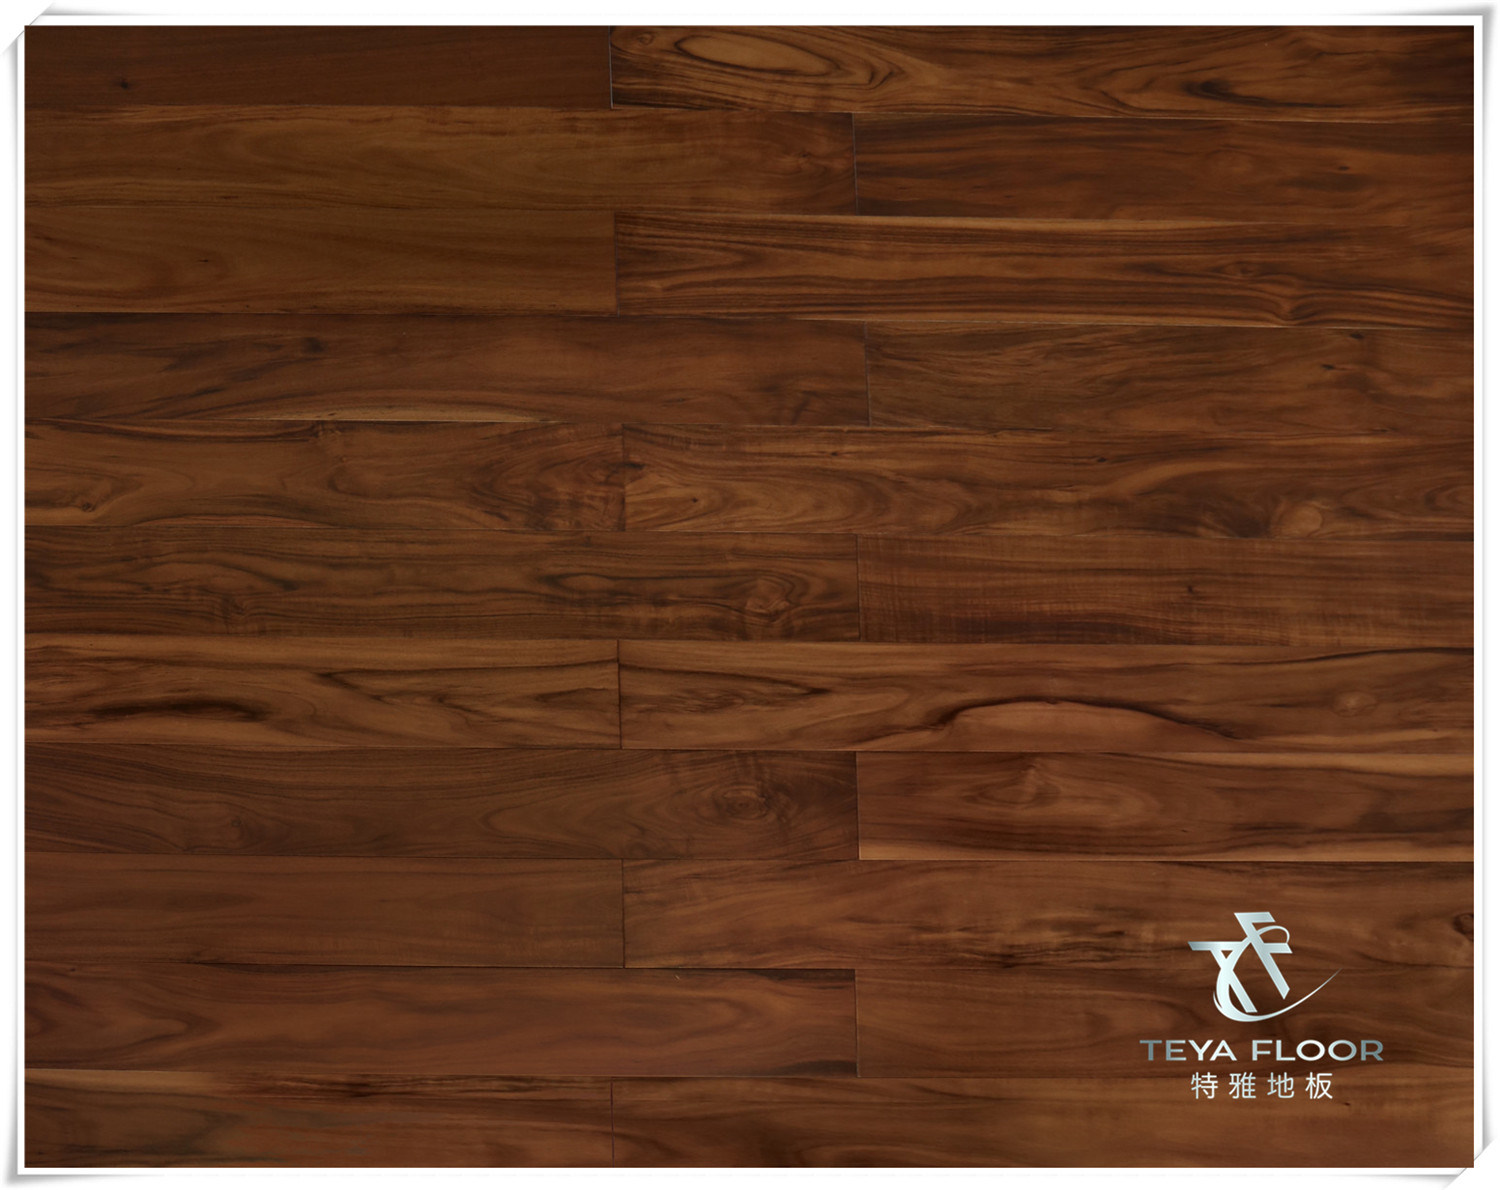 Acacia Solid Wood Flooring, Teak Color, Hardwood